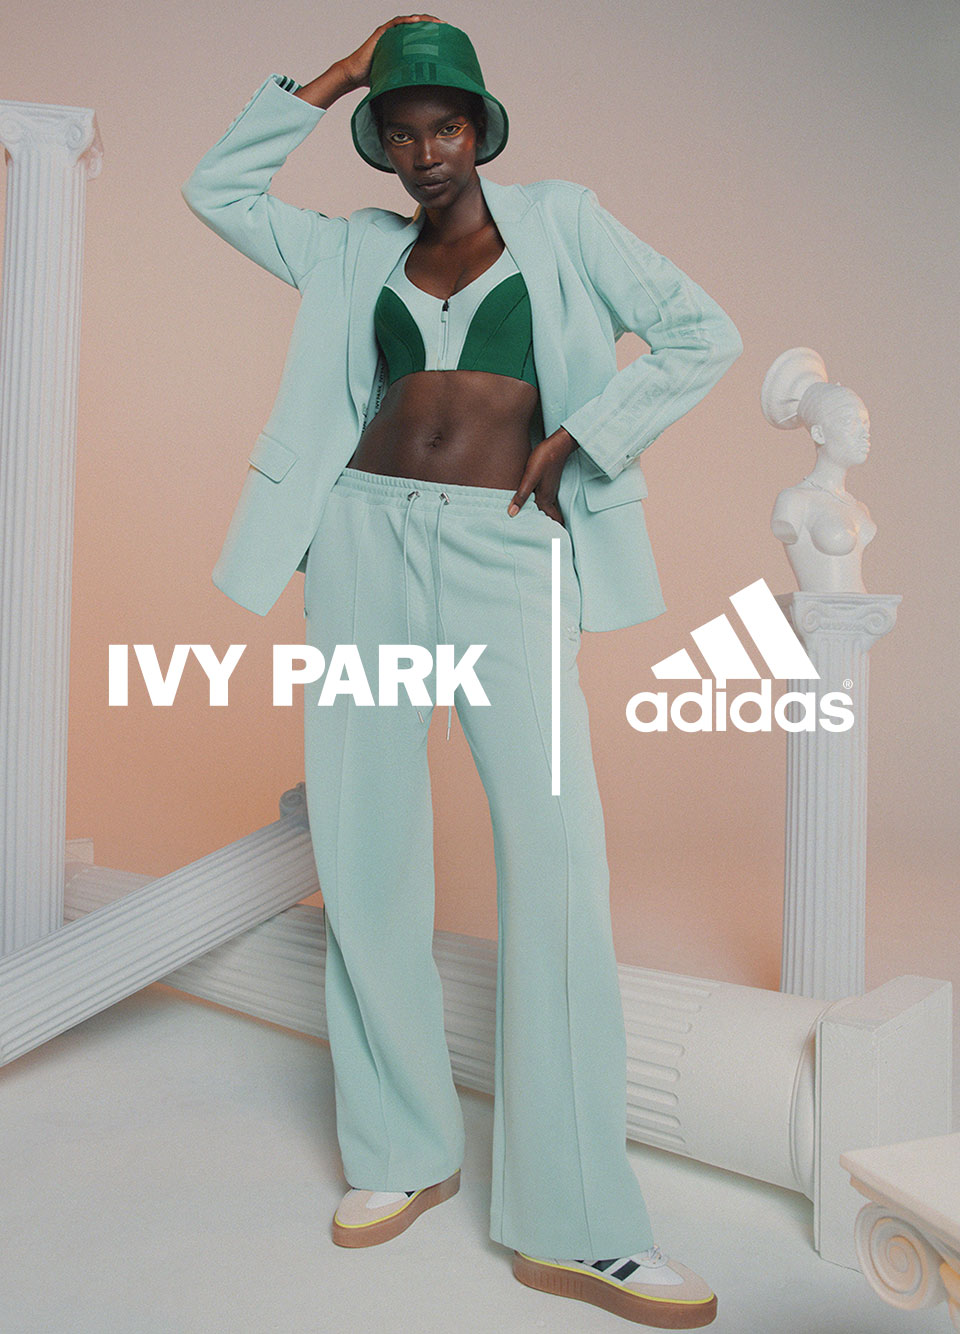 adidas x Ivy Park